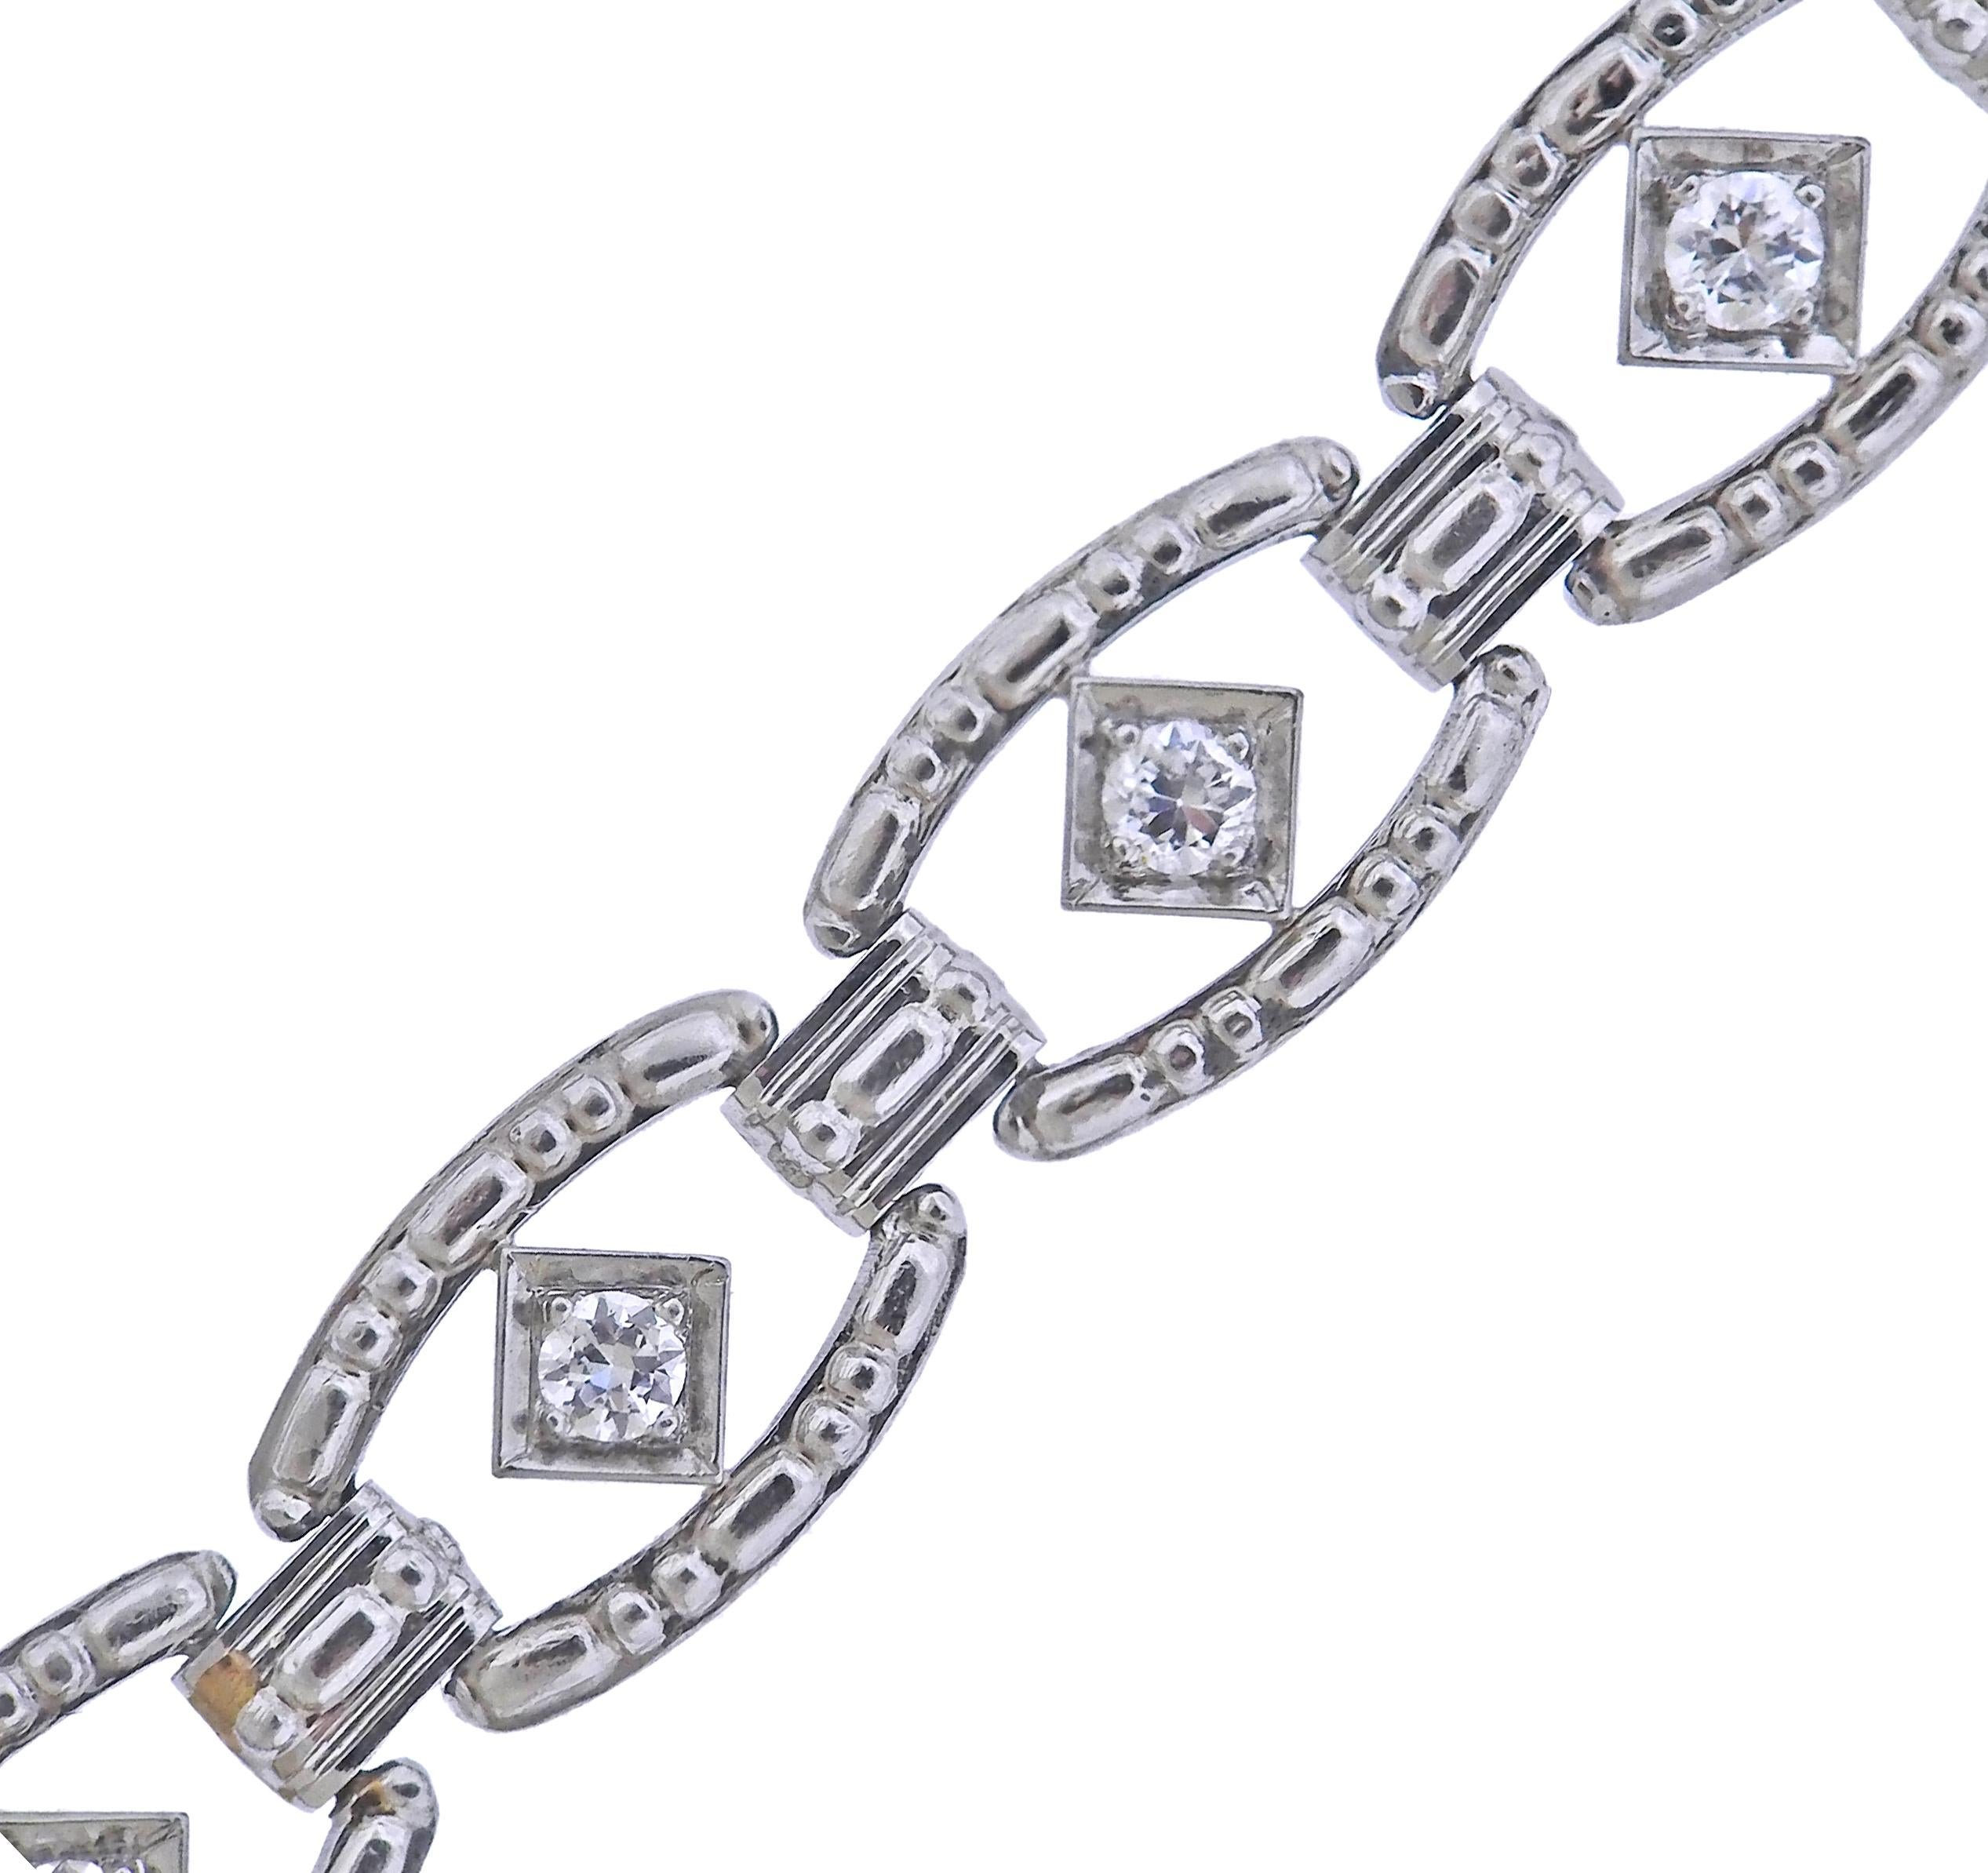 Art Deco platinum bracelet by Tiffany & Co, with approx. 0.35ctw in diamonds. Bracelet is 6.75